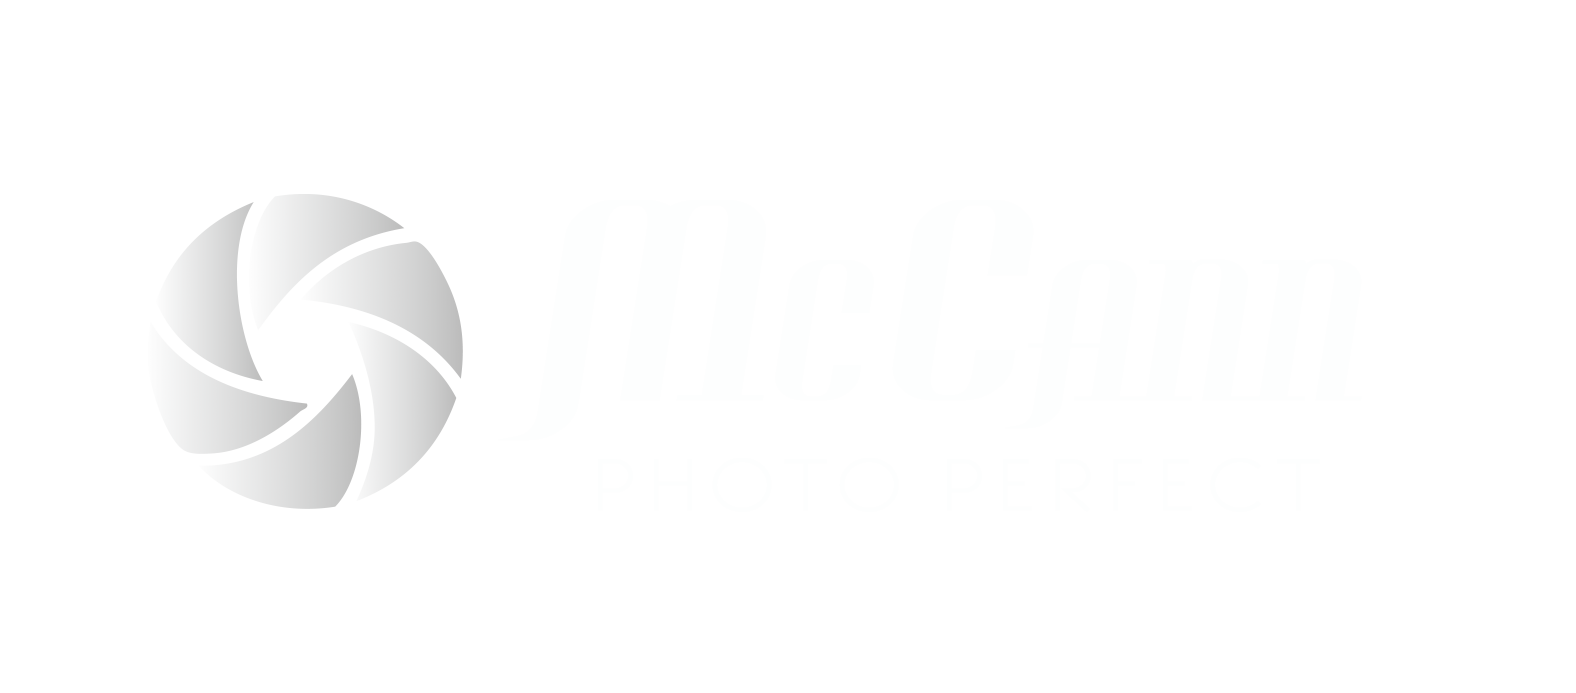 Professional Photographer in Des Moines Iowa - McCann Photo Perfect